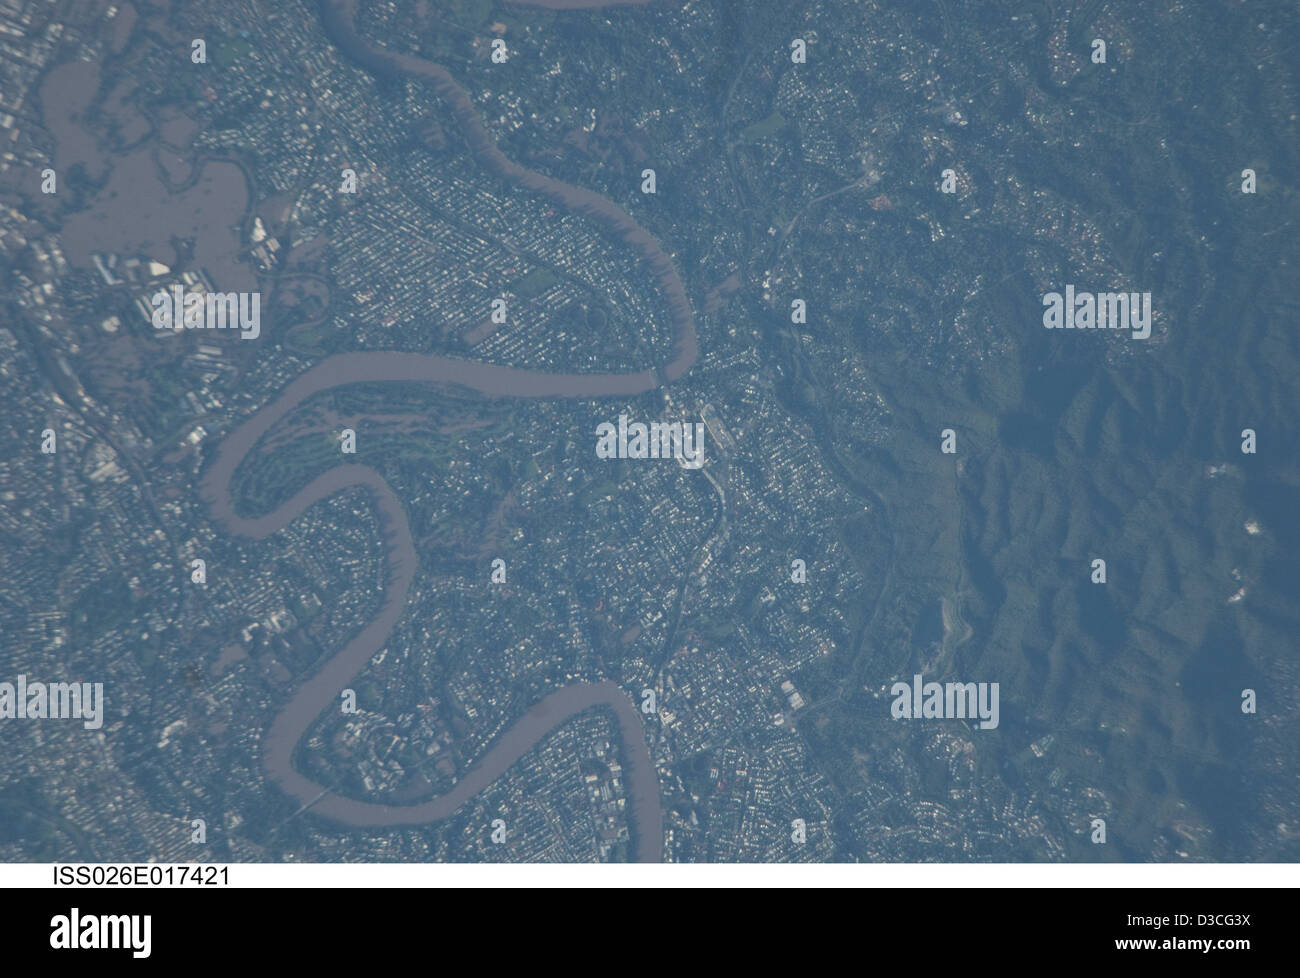 Brisbane, Australia Flooding (NASA, International Space Station, 01/13/11) Stock Photo